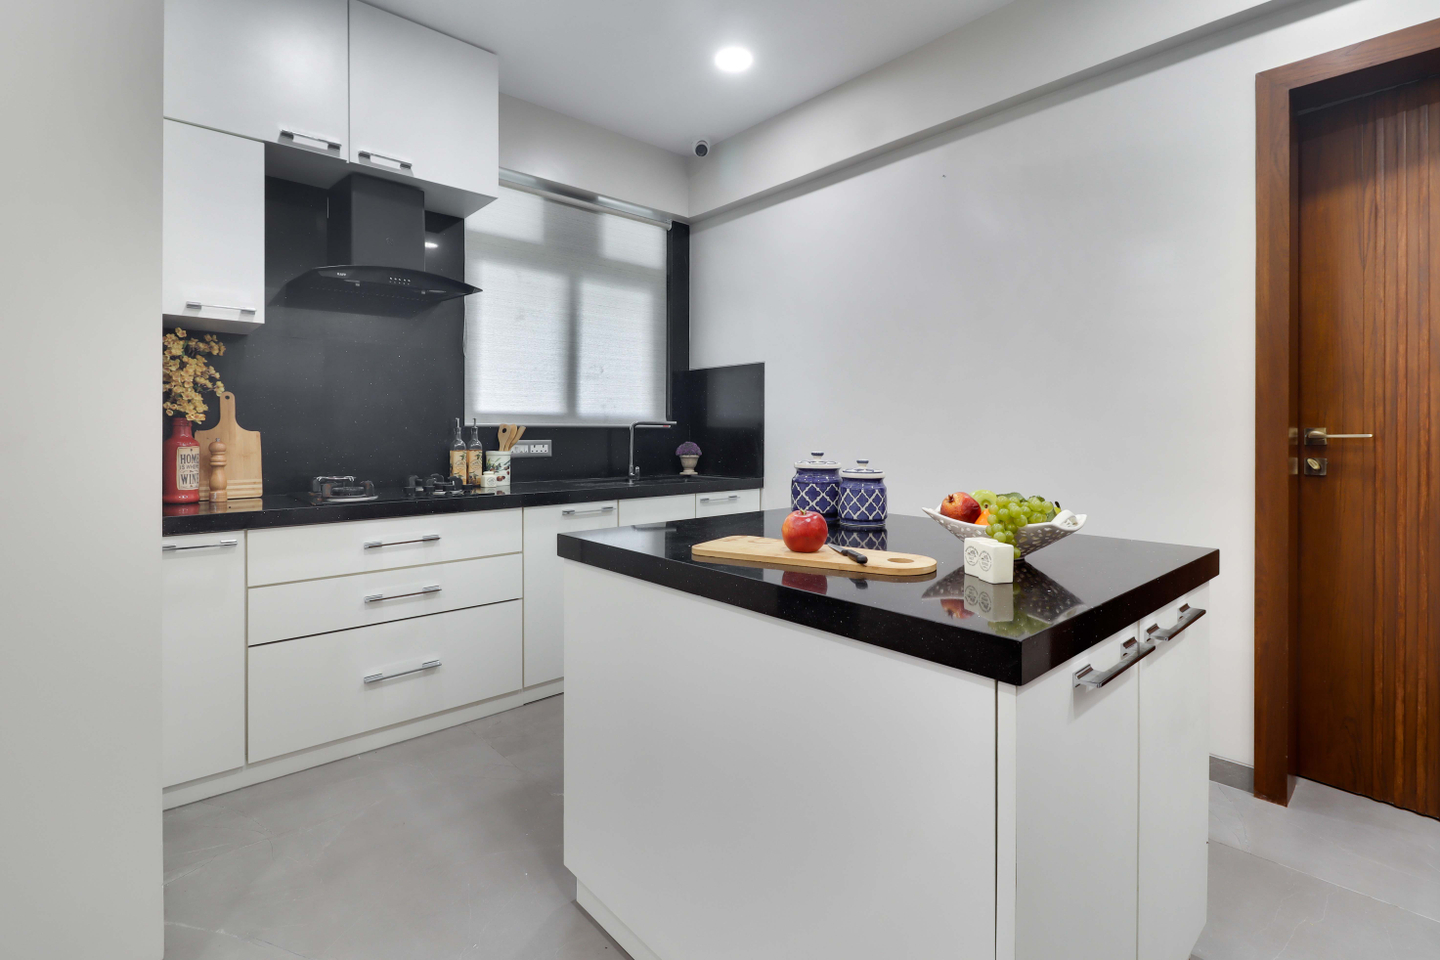 Modern Modular Island Kitchen Cabinet Design With A Granite Countertop